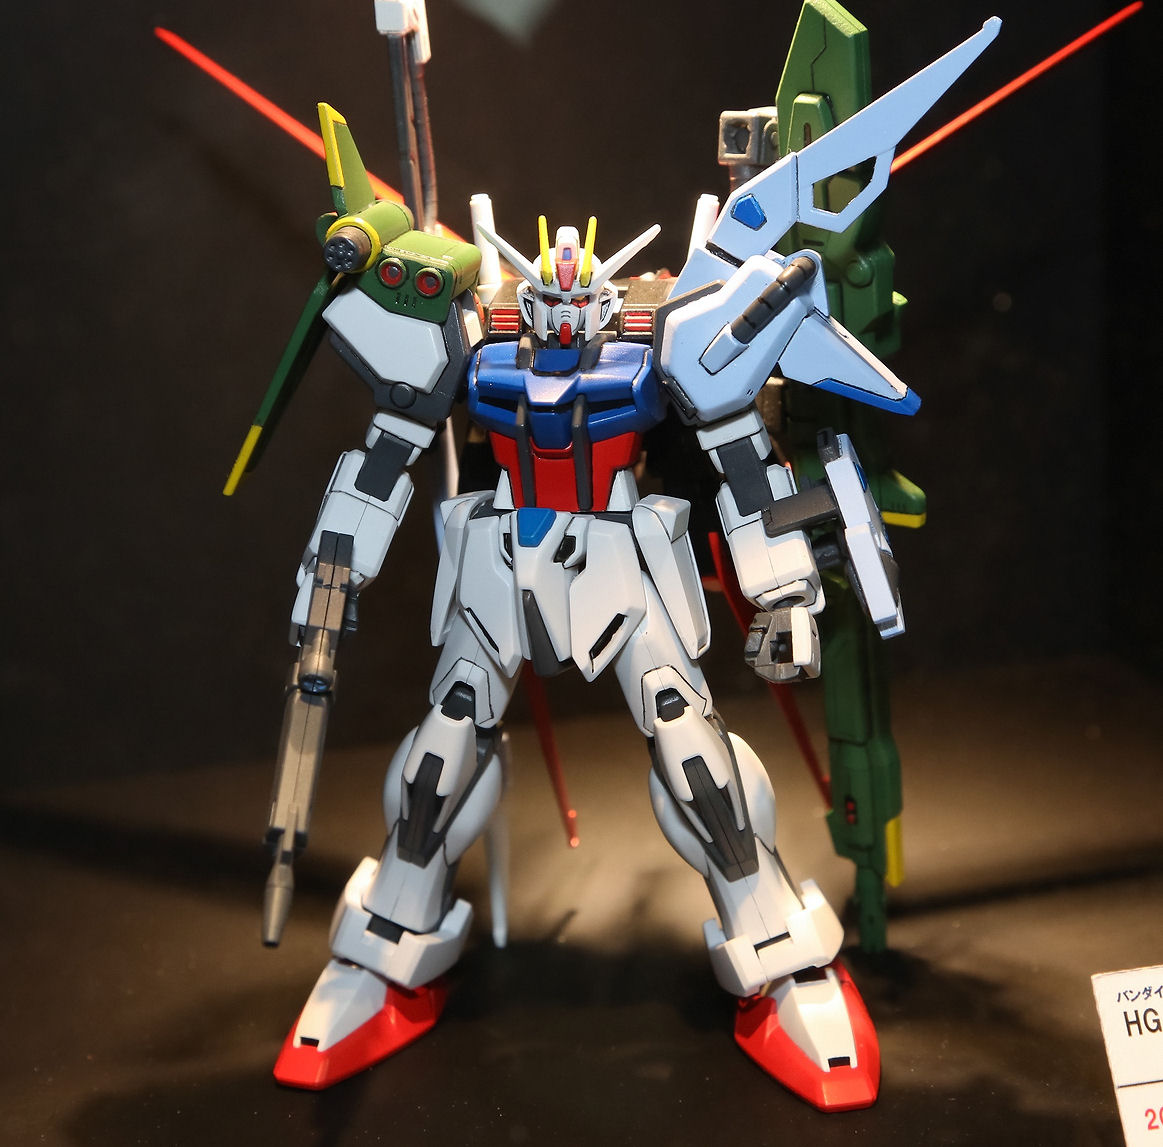 HG 1144 Perfect Strike Gundam Gunpla Expo World Tour Japan 2012